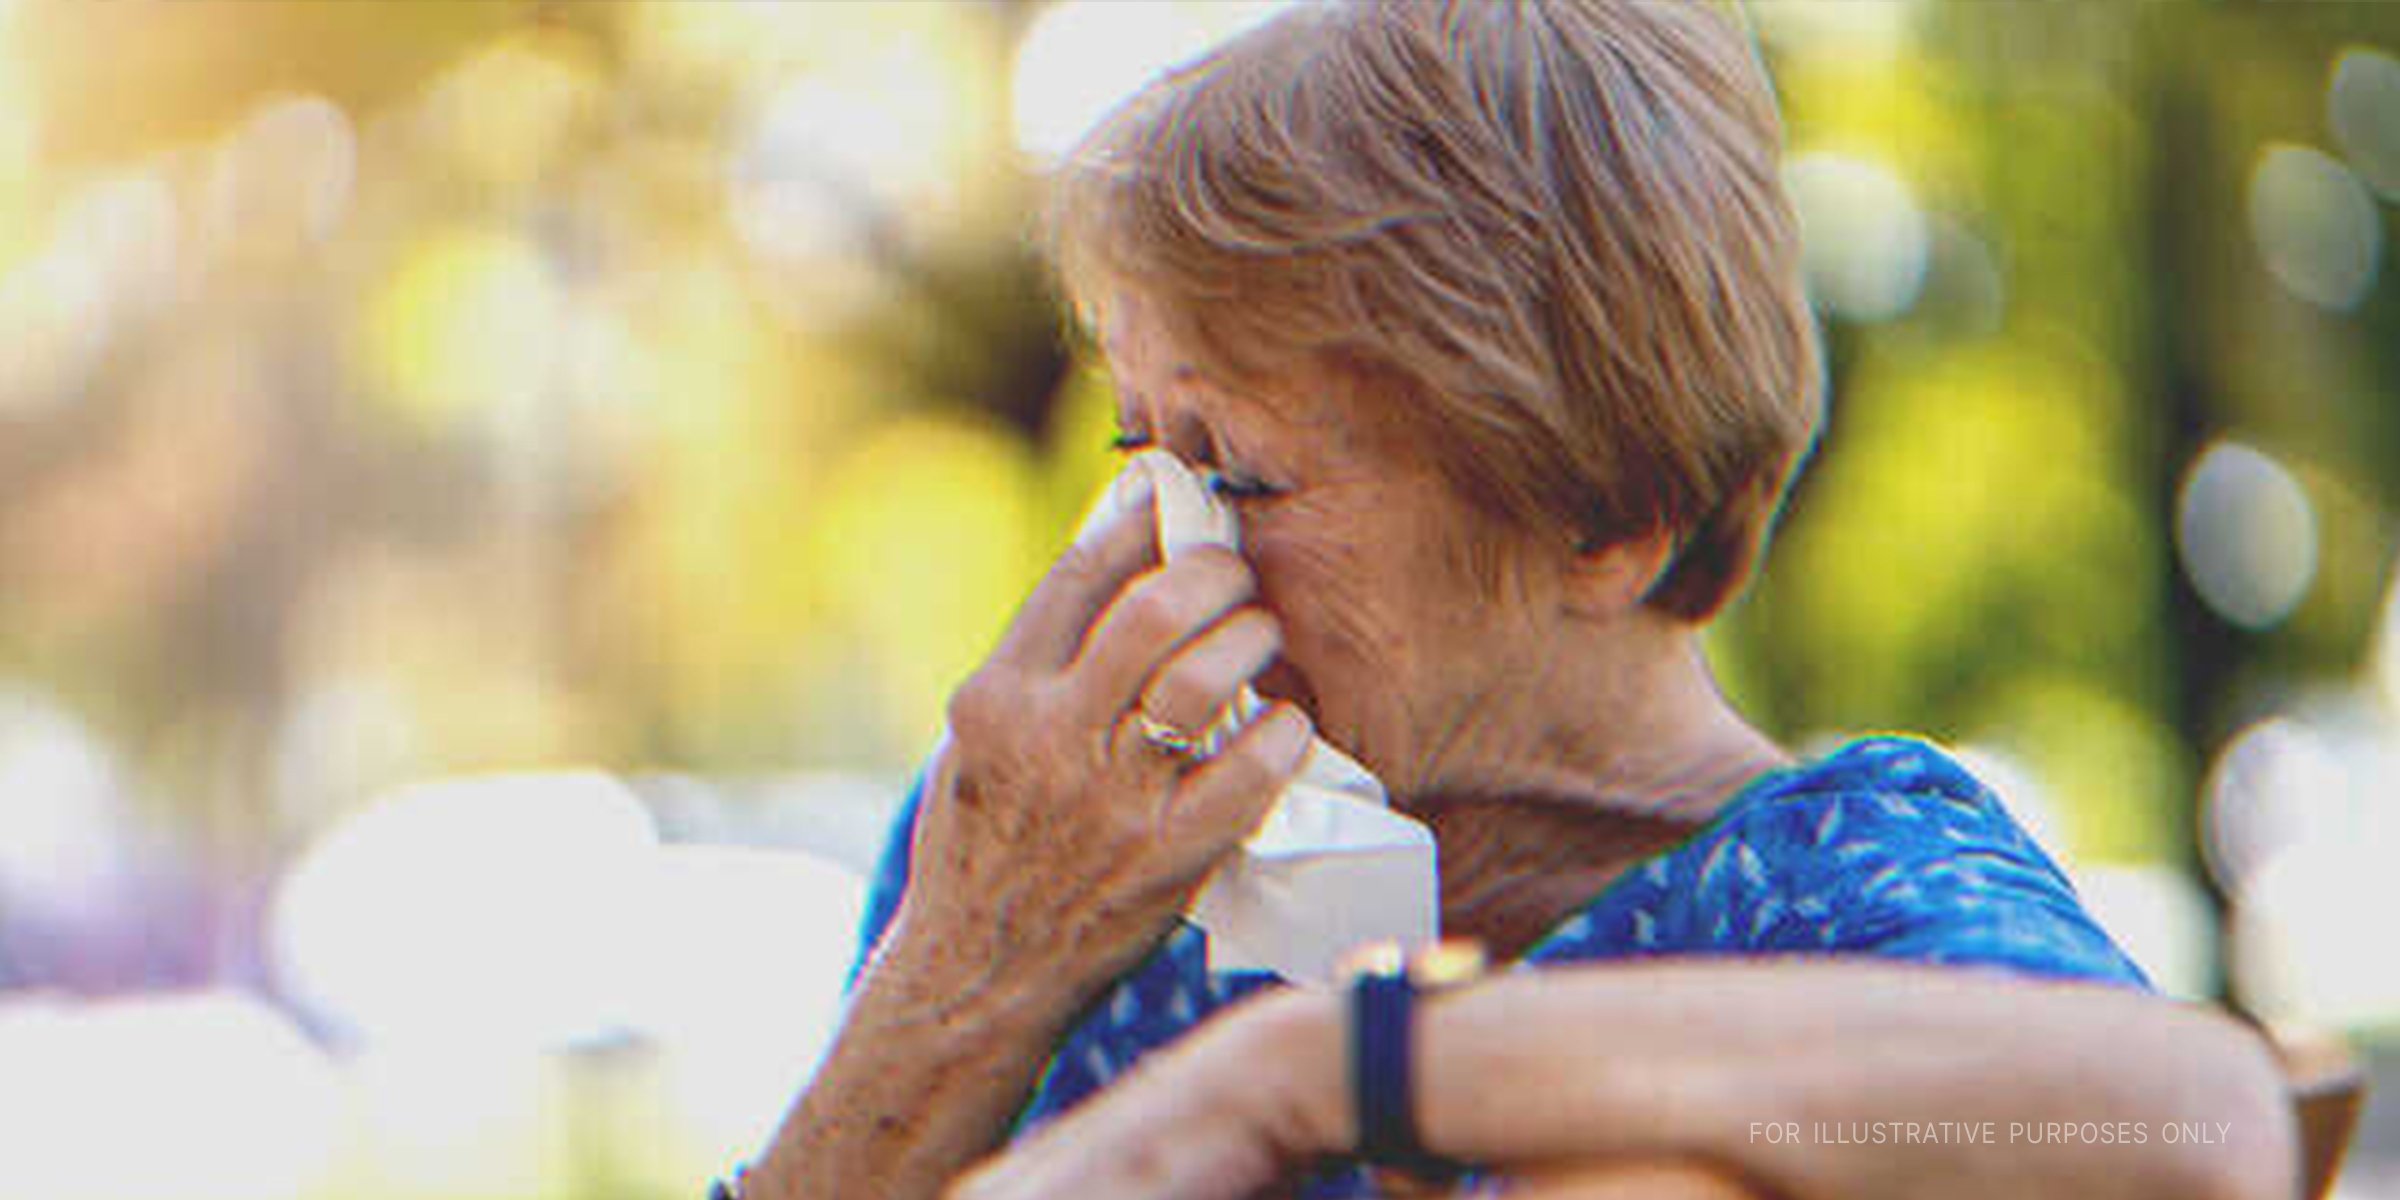 An older woman wiping her tears | Source: Shutterstock